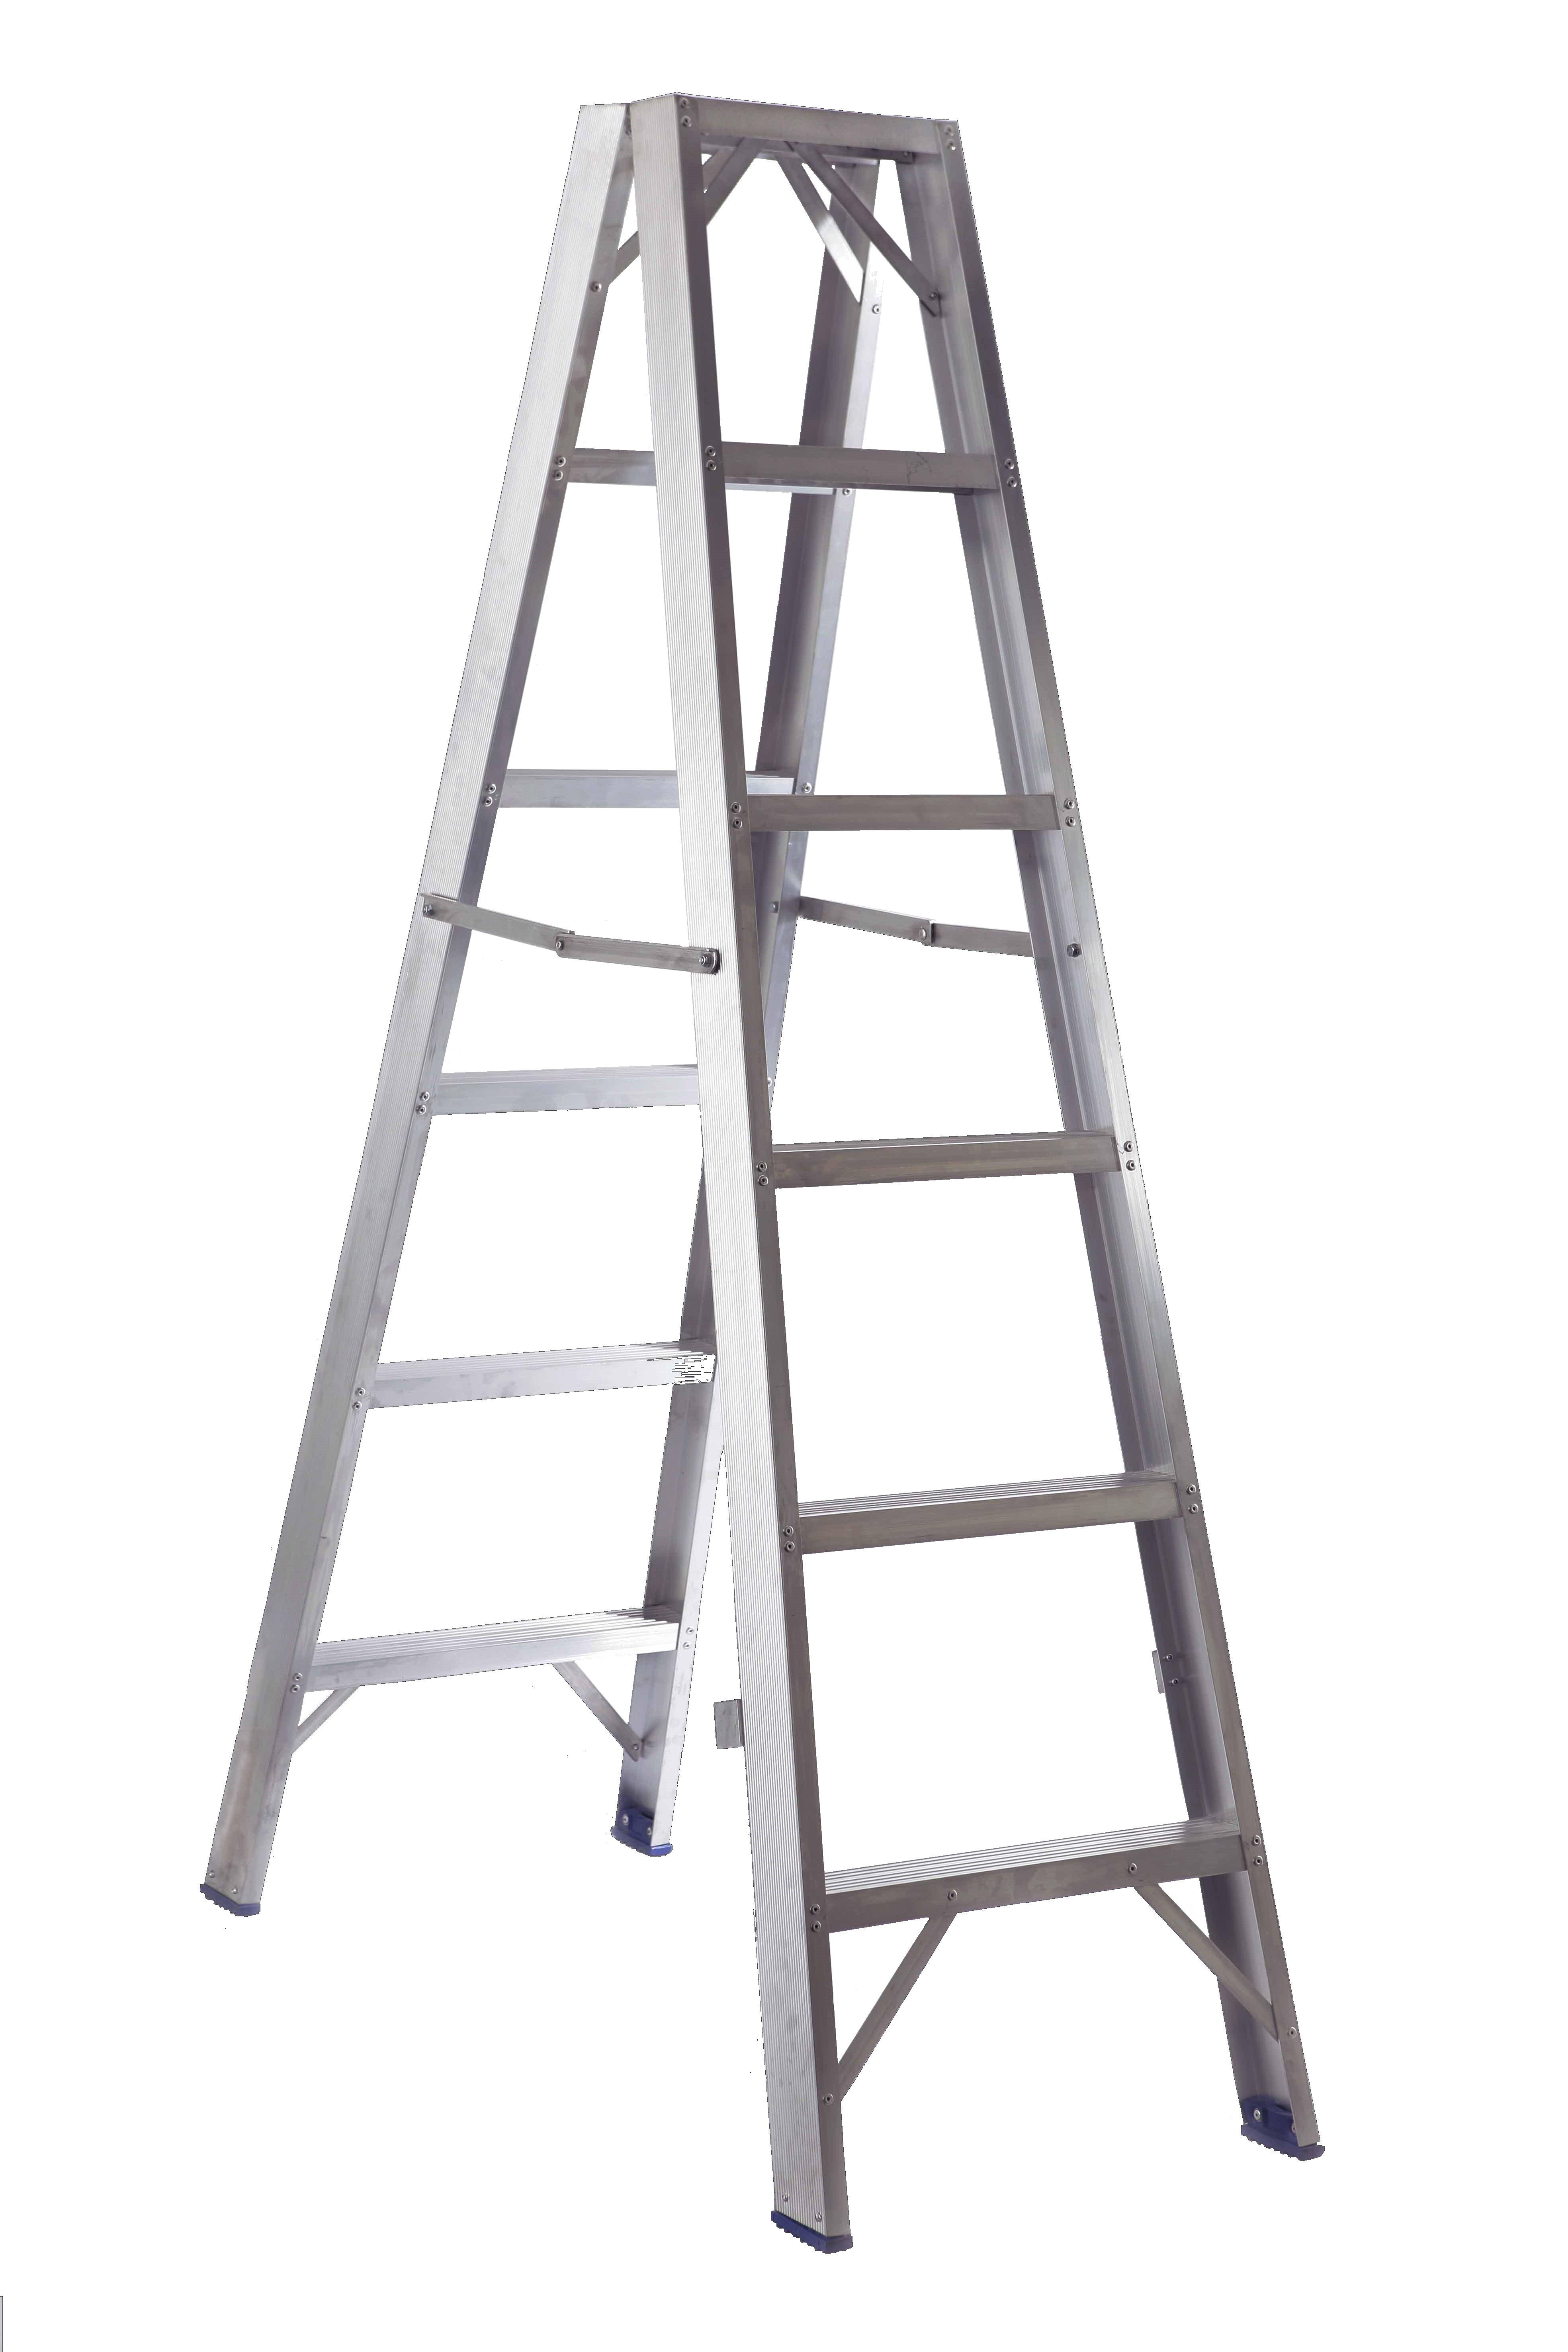 Ladder clipart pool ladder. Steel png